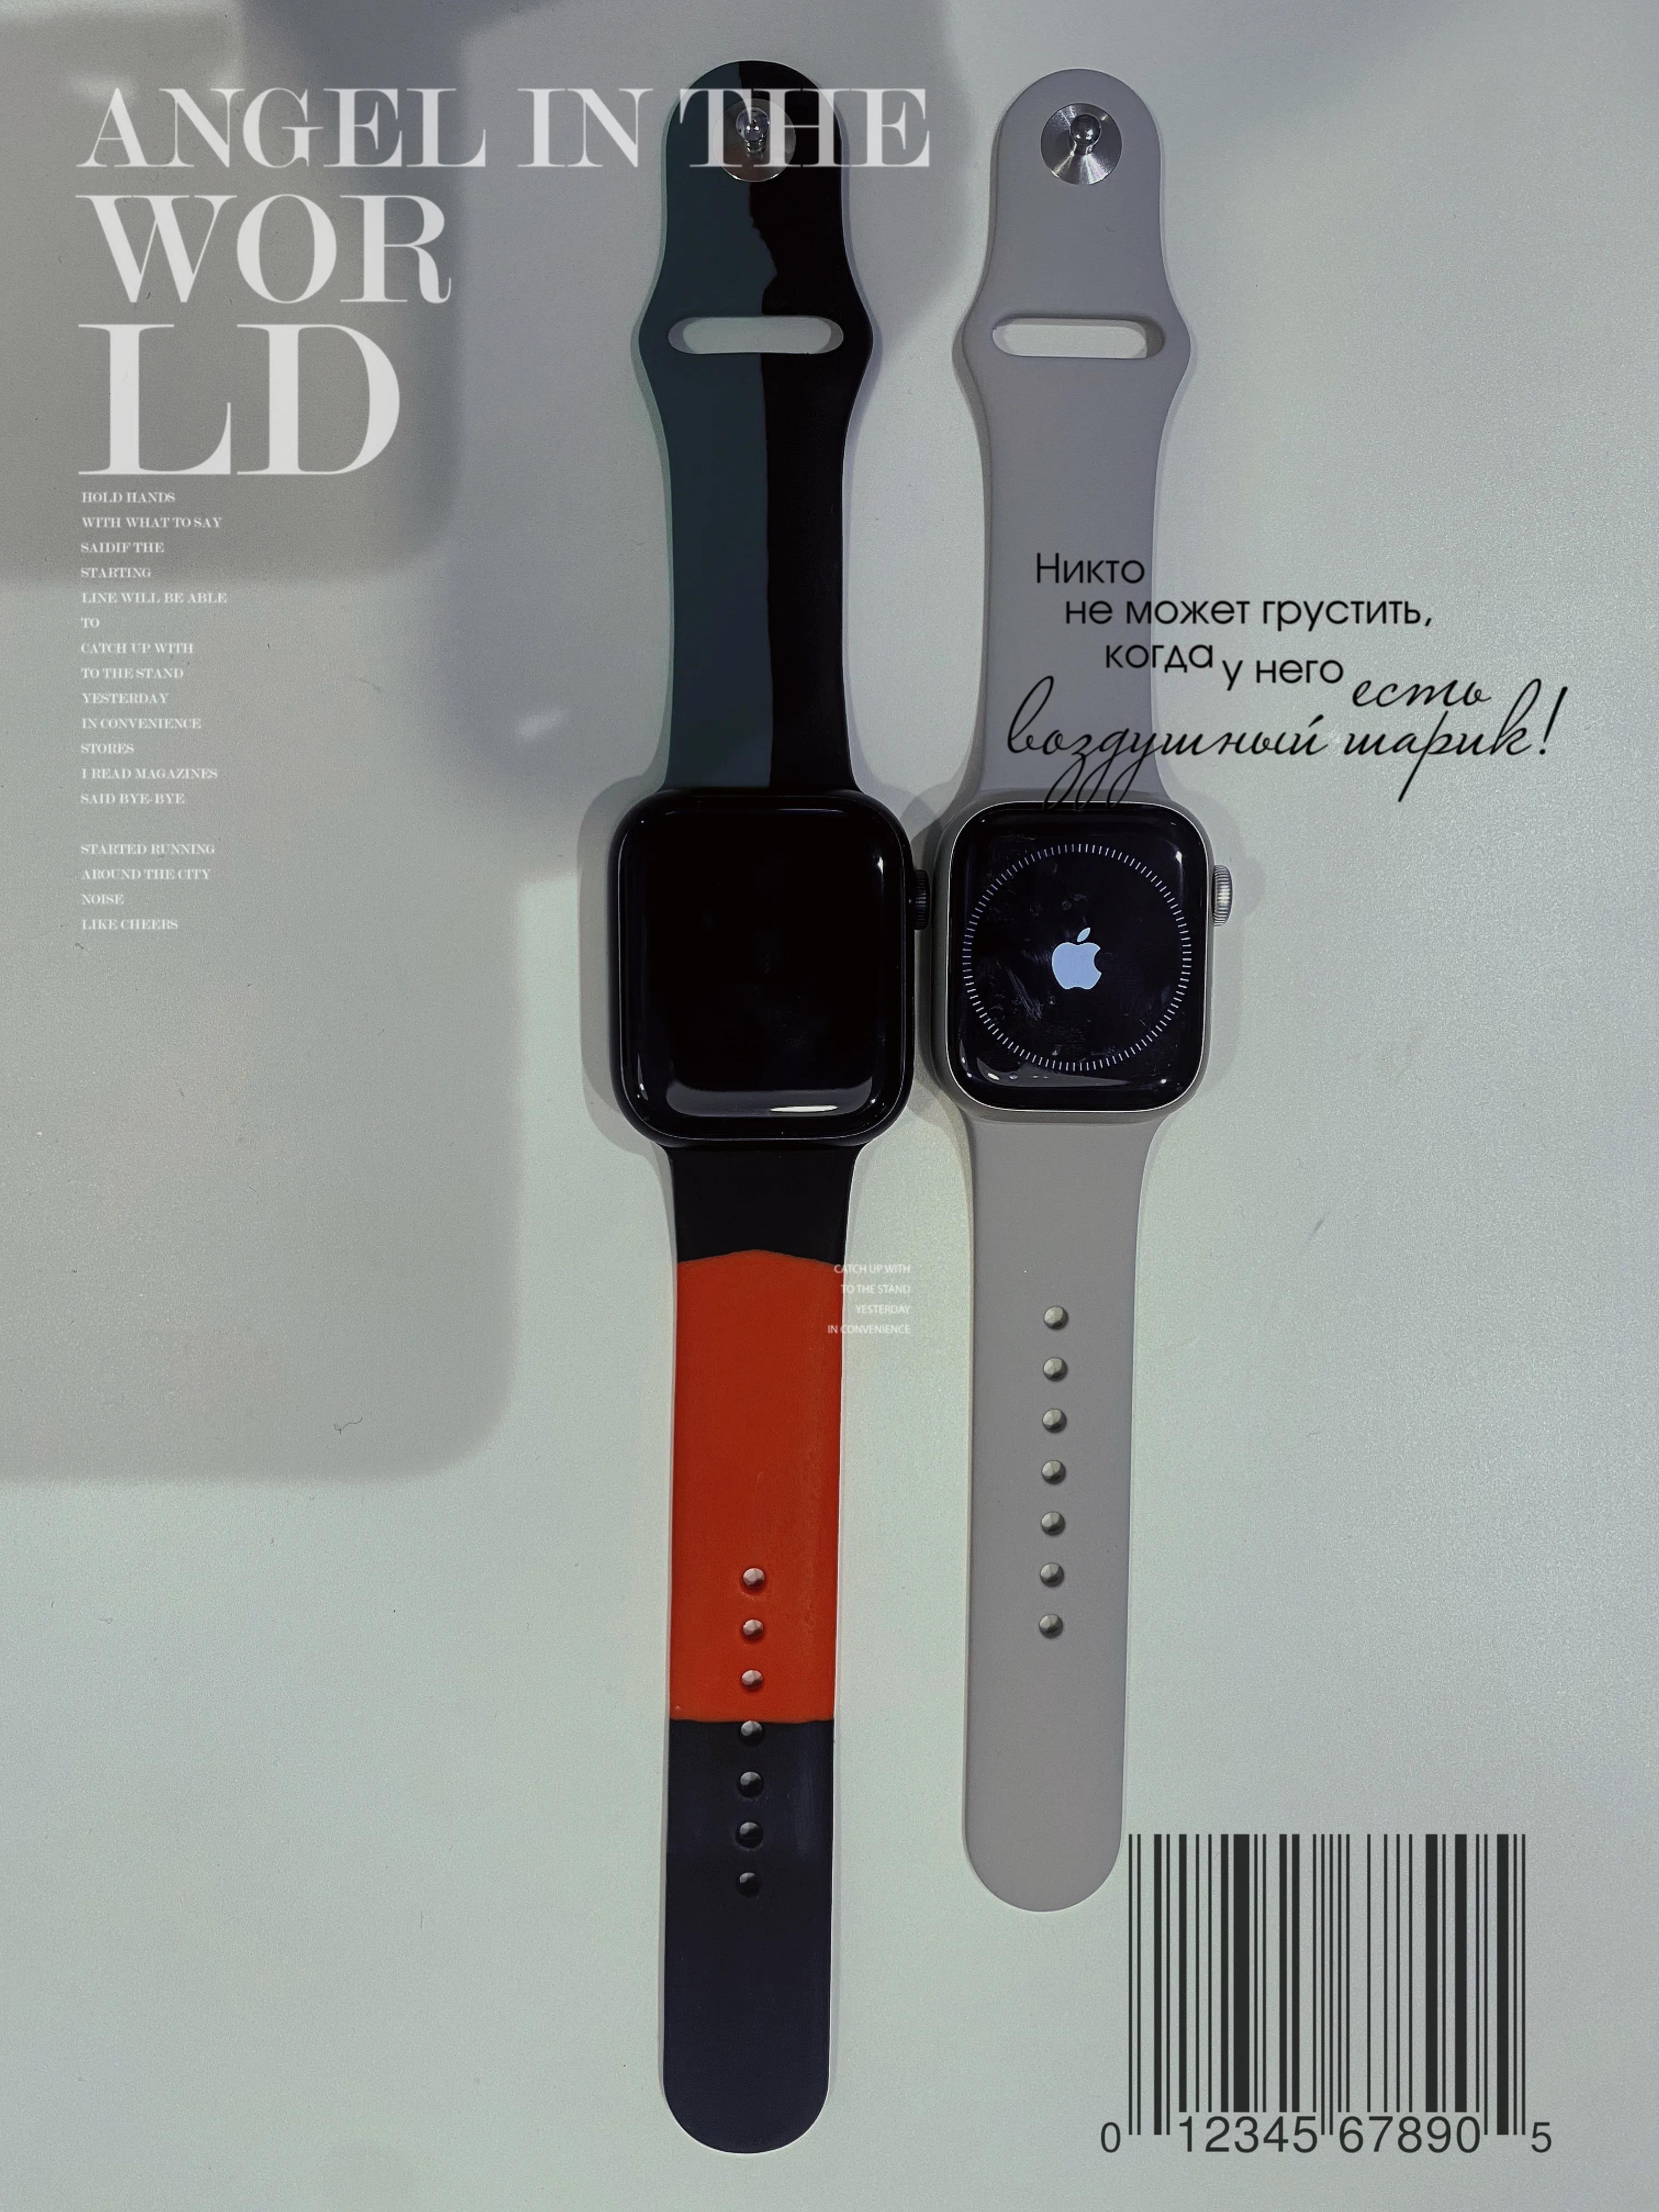 Apple Watch Series 2智能手表 - 普象网